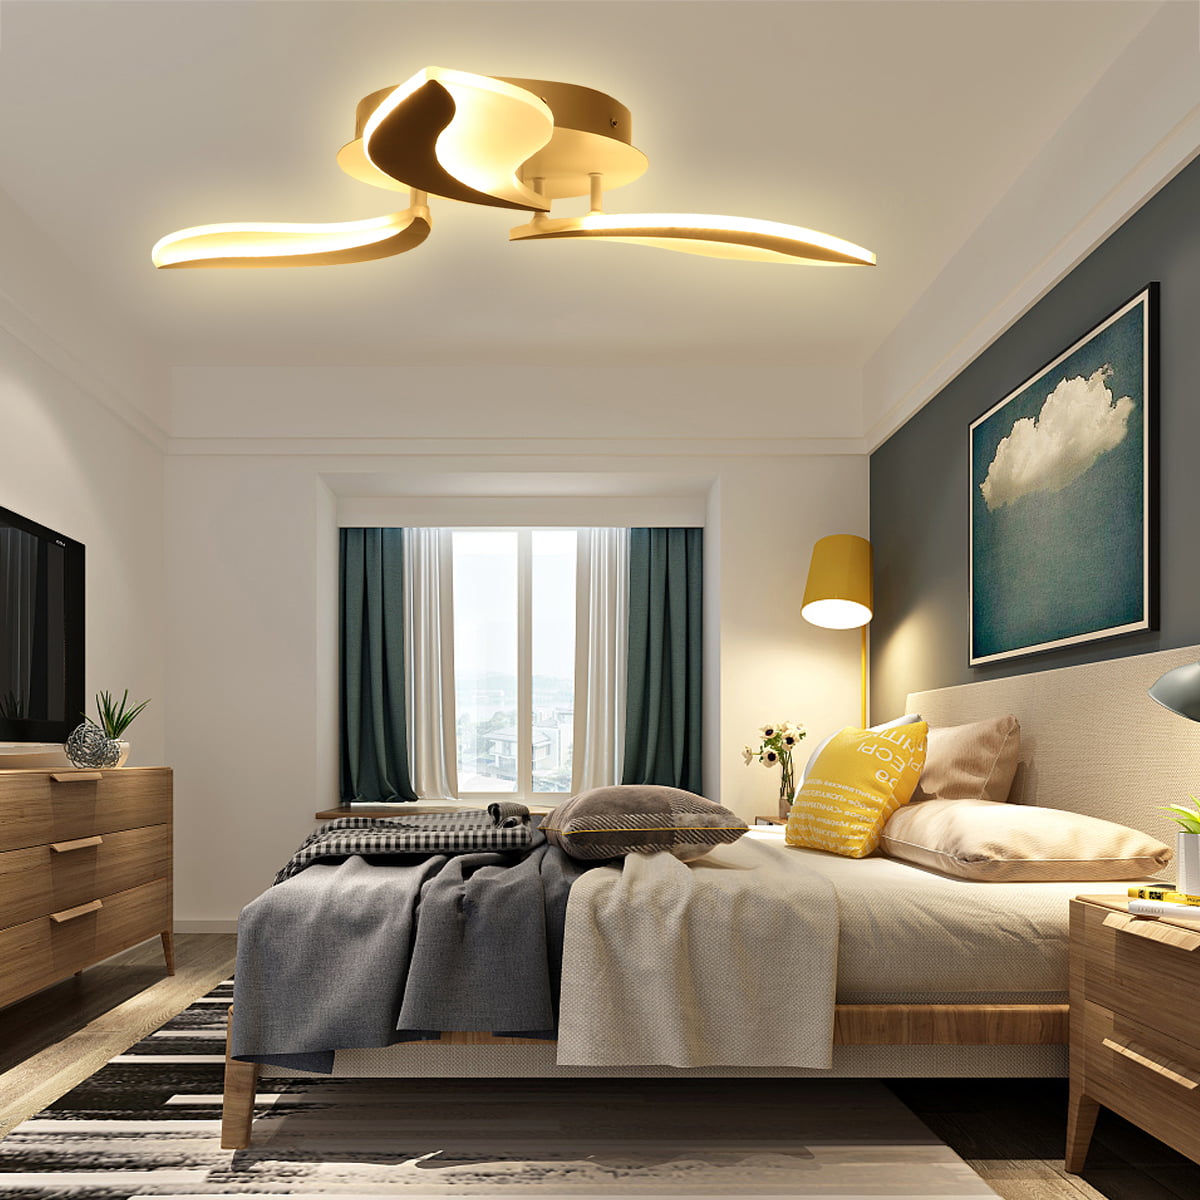 Innovative Illumination: Modern Lighting Solutions For Every Room